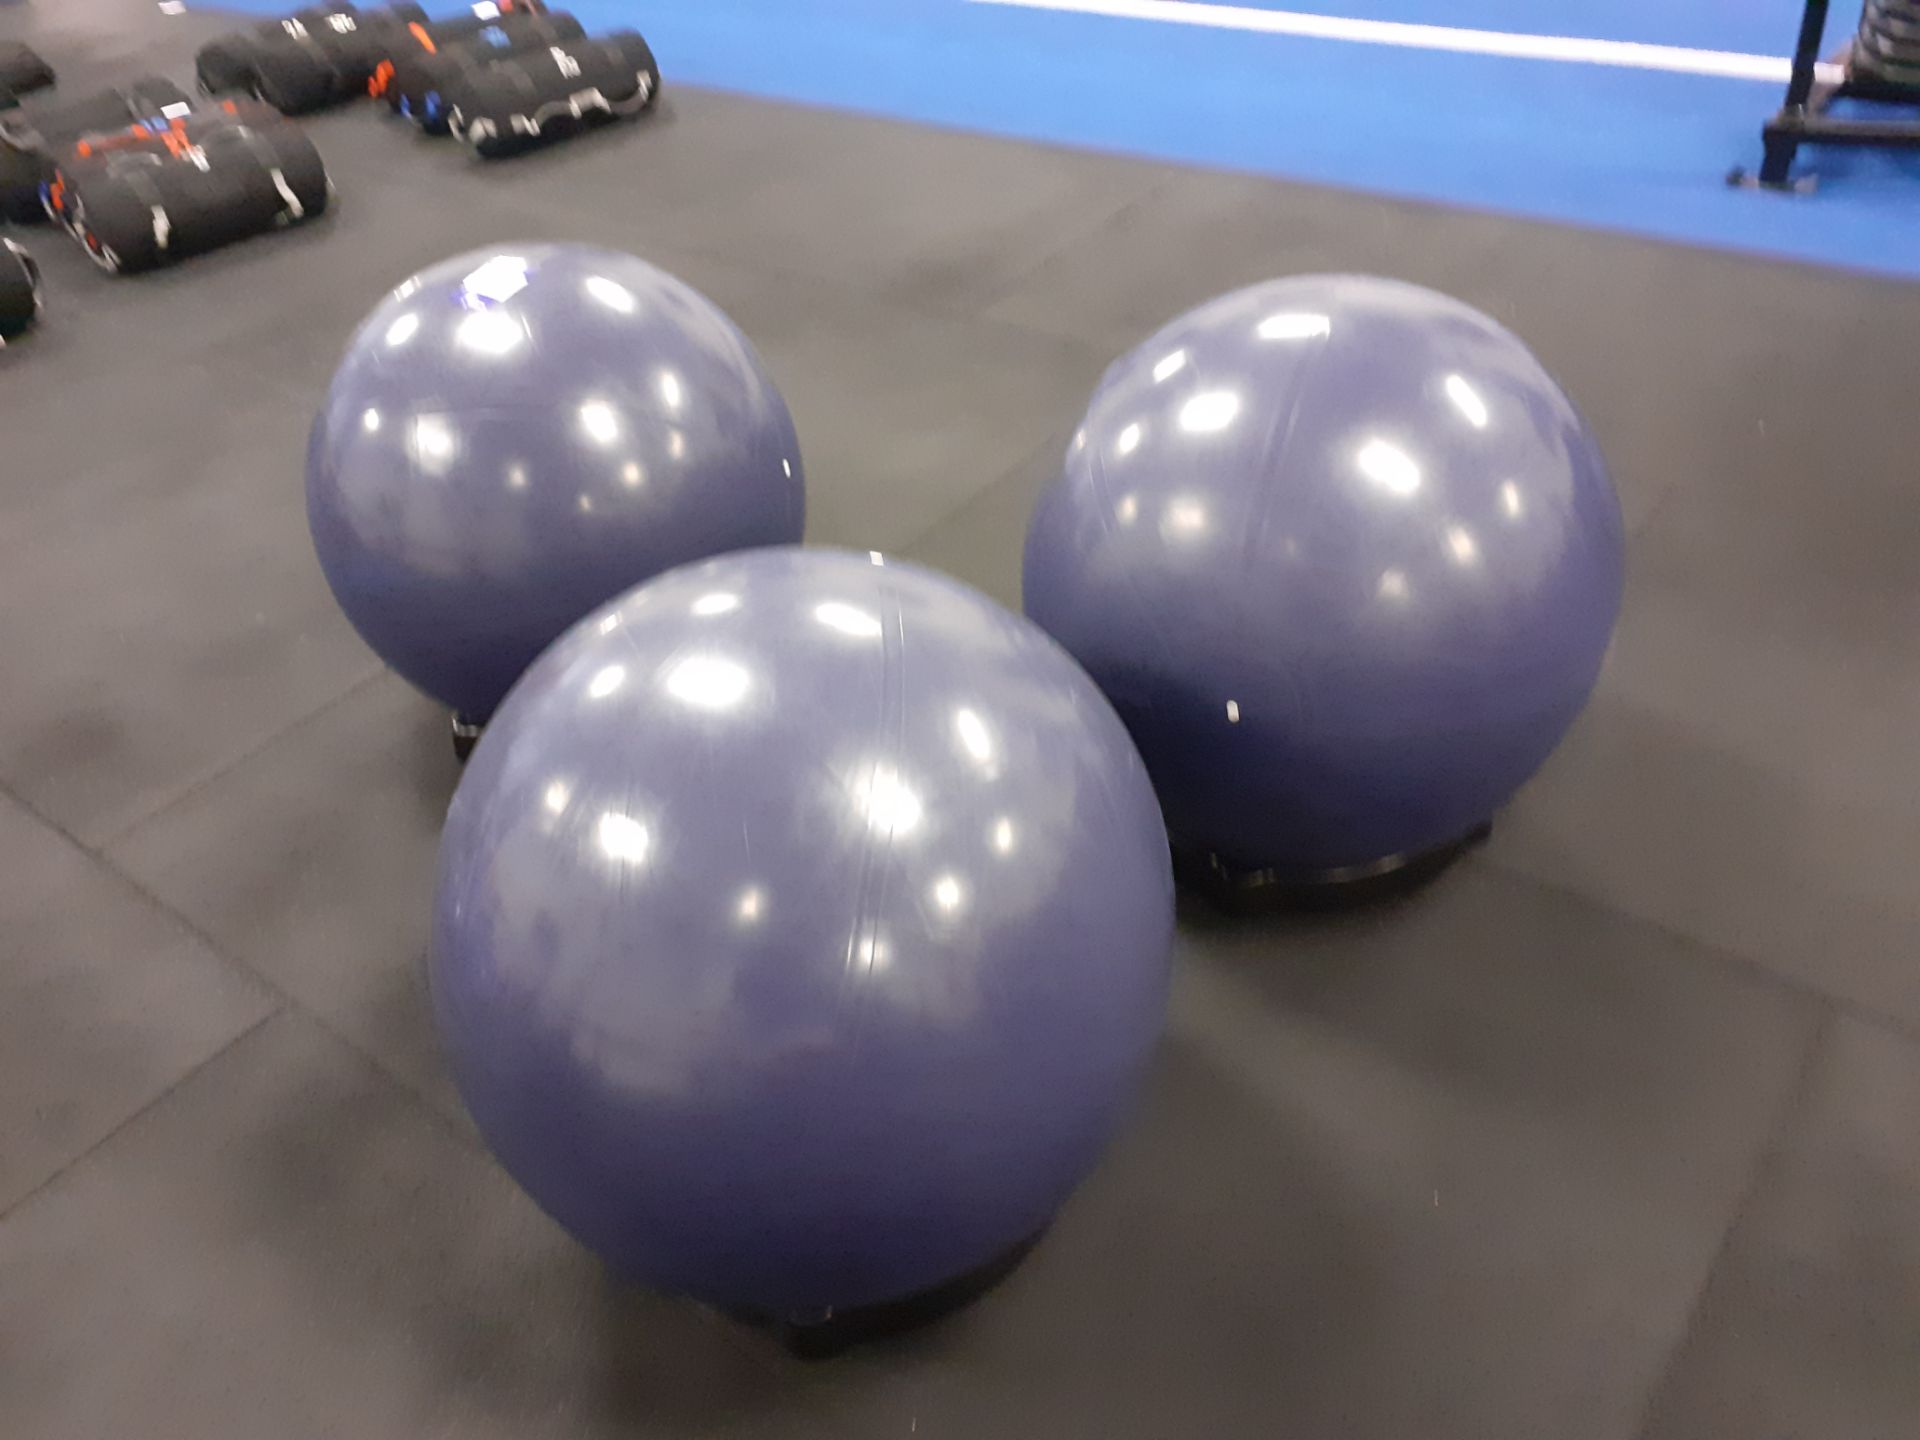 3 F45 Exercise Balls